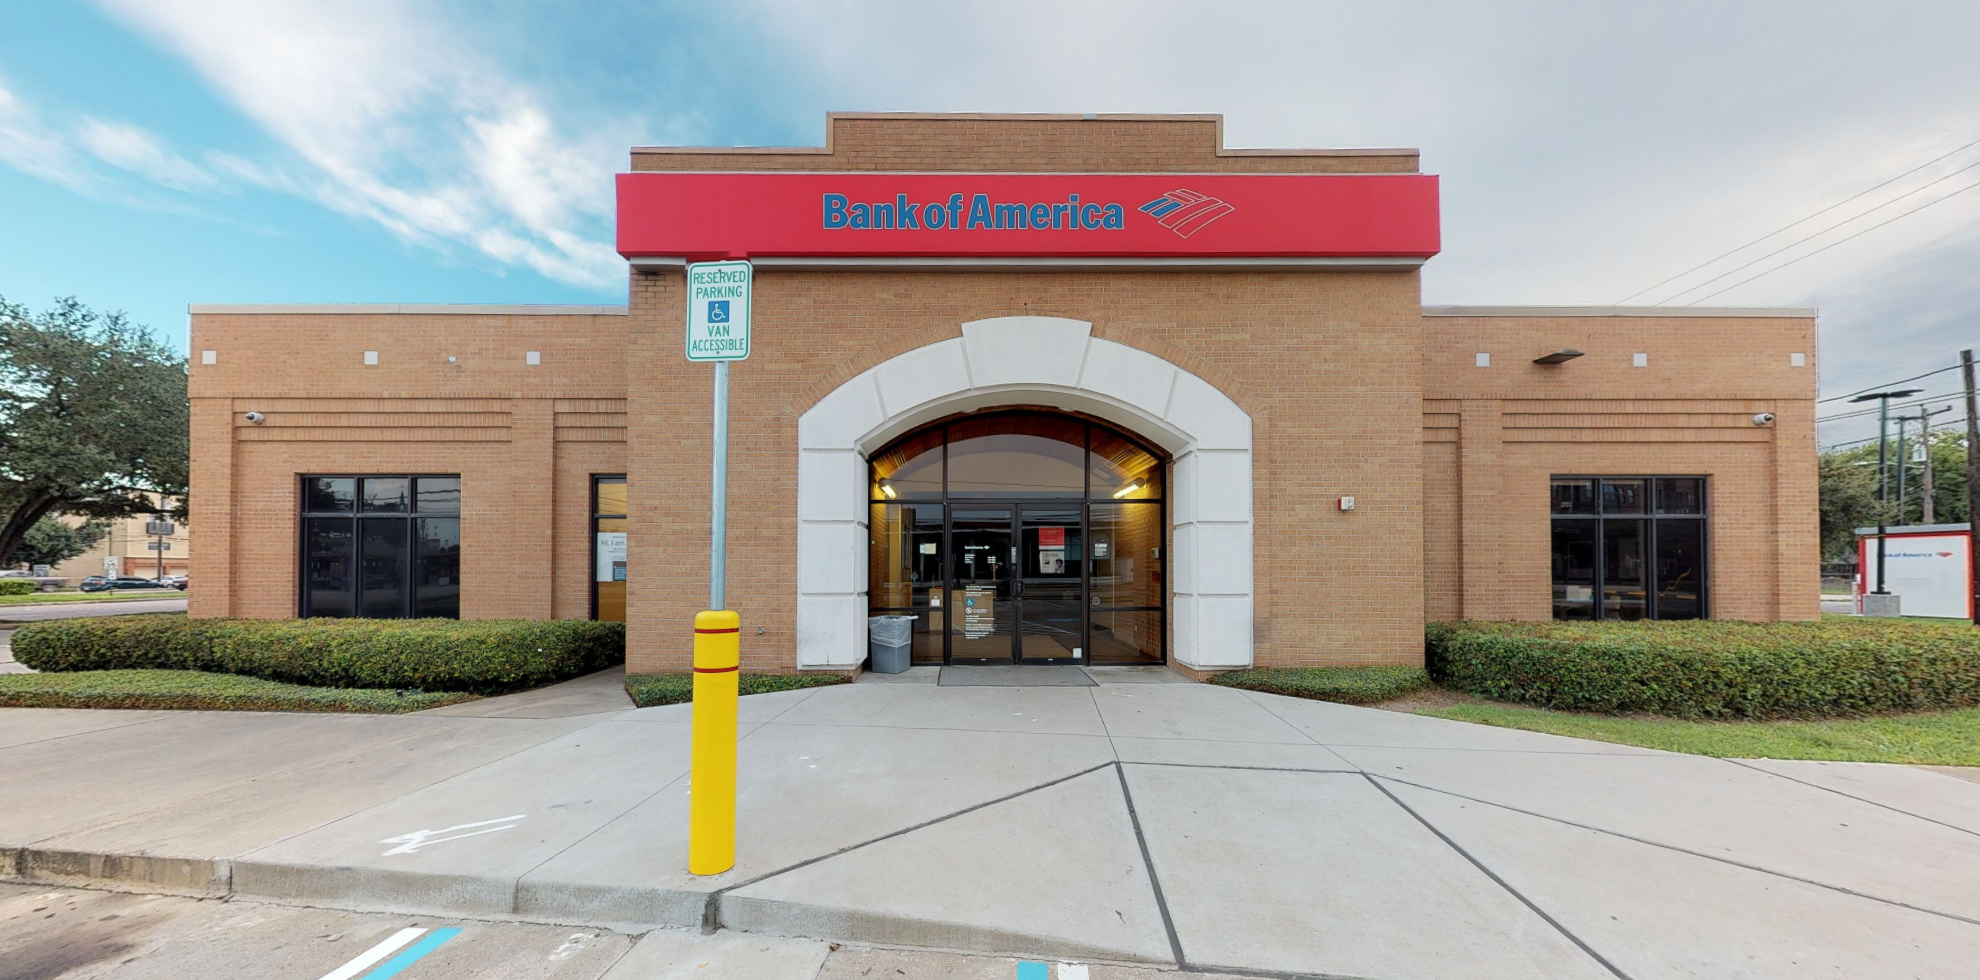 Bank of America financial center with drive-thru ATM | 3811 Washington Ave, Houston, TX 77007